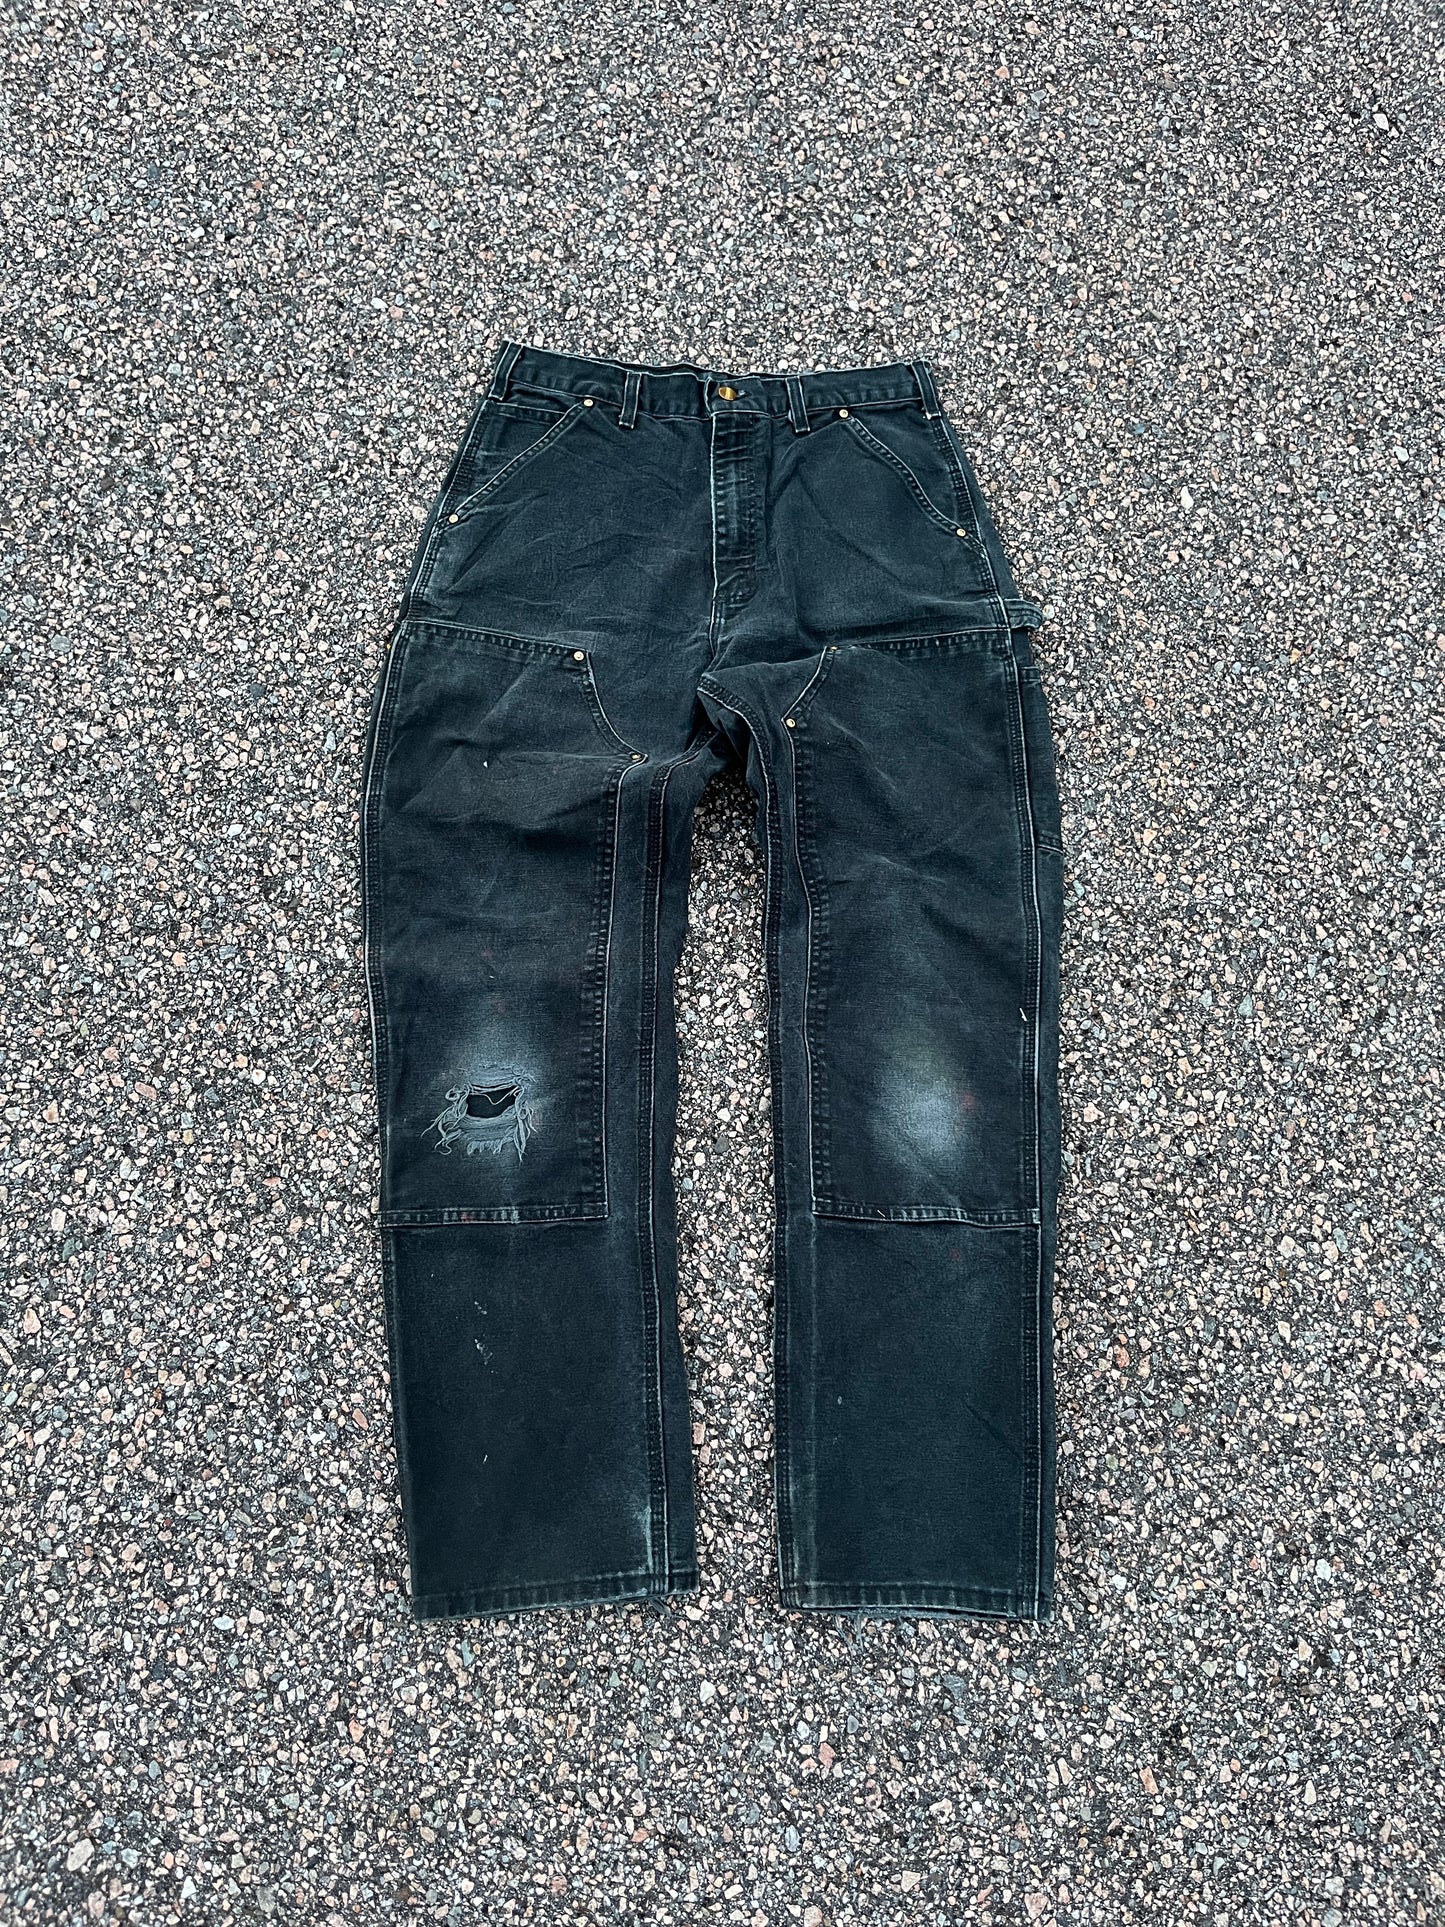 Faded Black Carhartt Double Knee Pants - 31 x 30.5